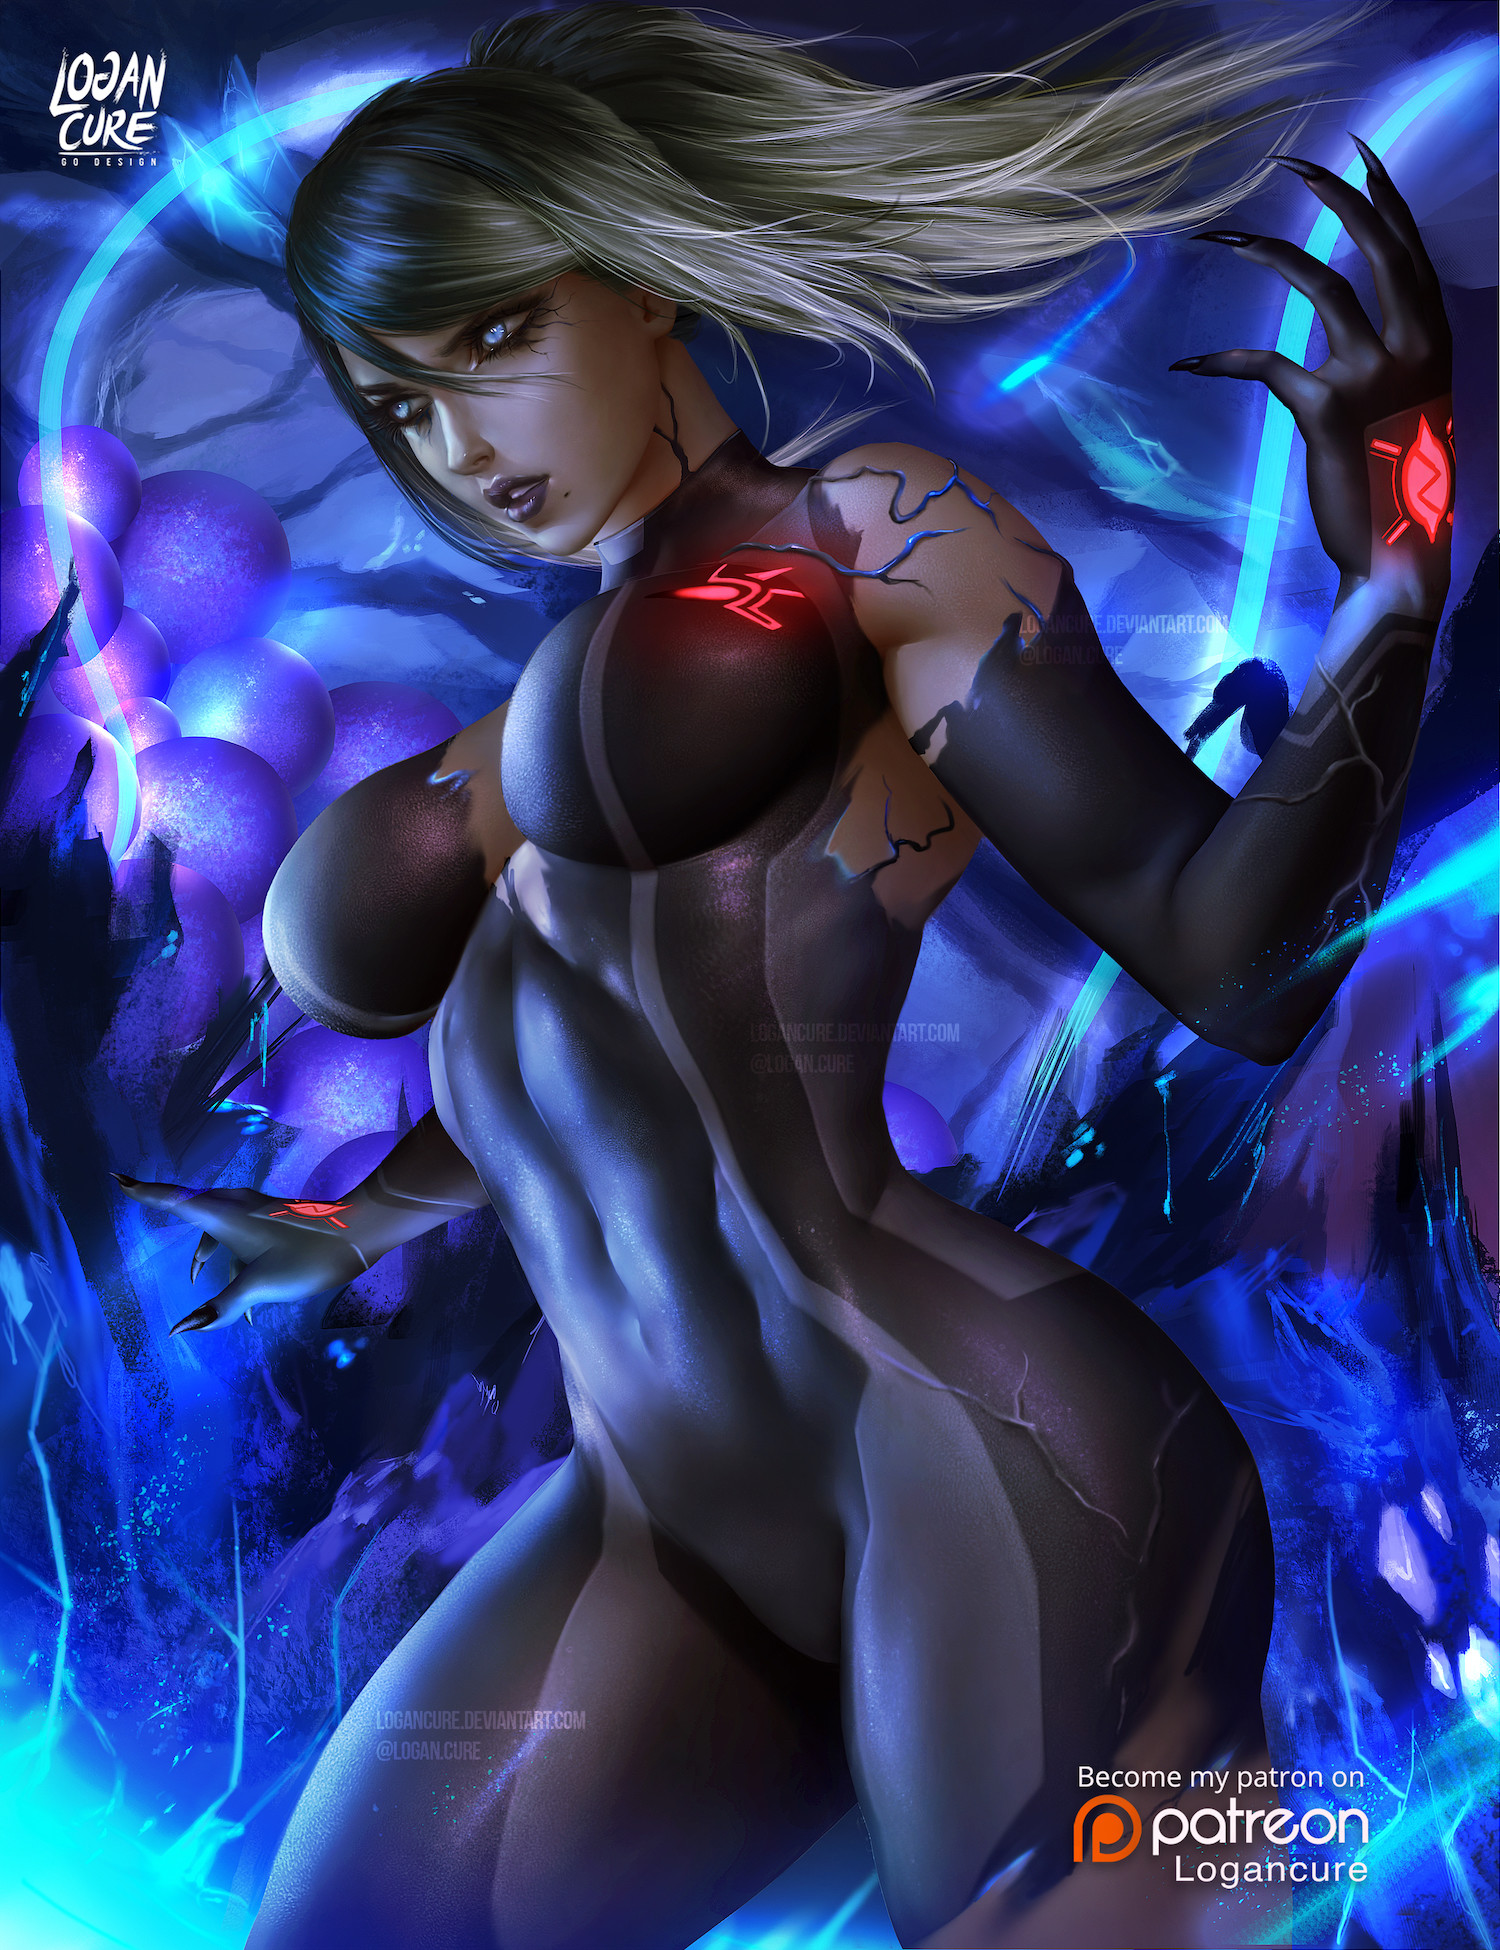 General 1500x1950 Logan Cure drawing Samus Aran Metroid Zero Suit Samus ombre hair bodysuit glowing blue eyes blue claws digital art